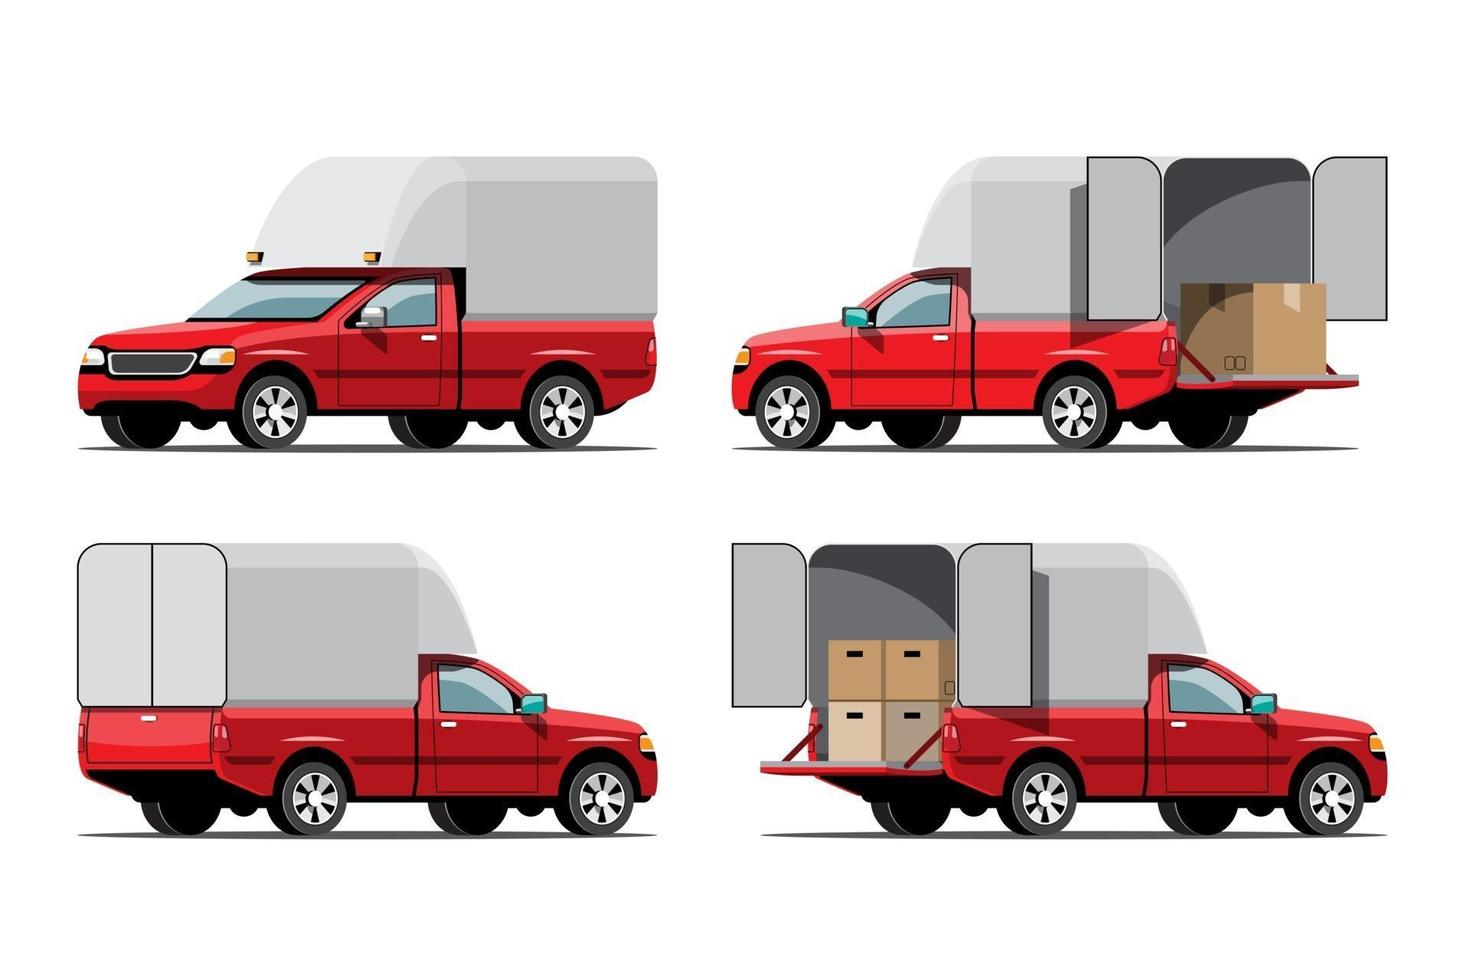 grand ensemble d'icônes vectorielles de véhicules isolés, illustrations plates diverses vues de van, concept de transport commercial logistique. vecteur